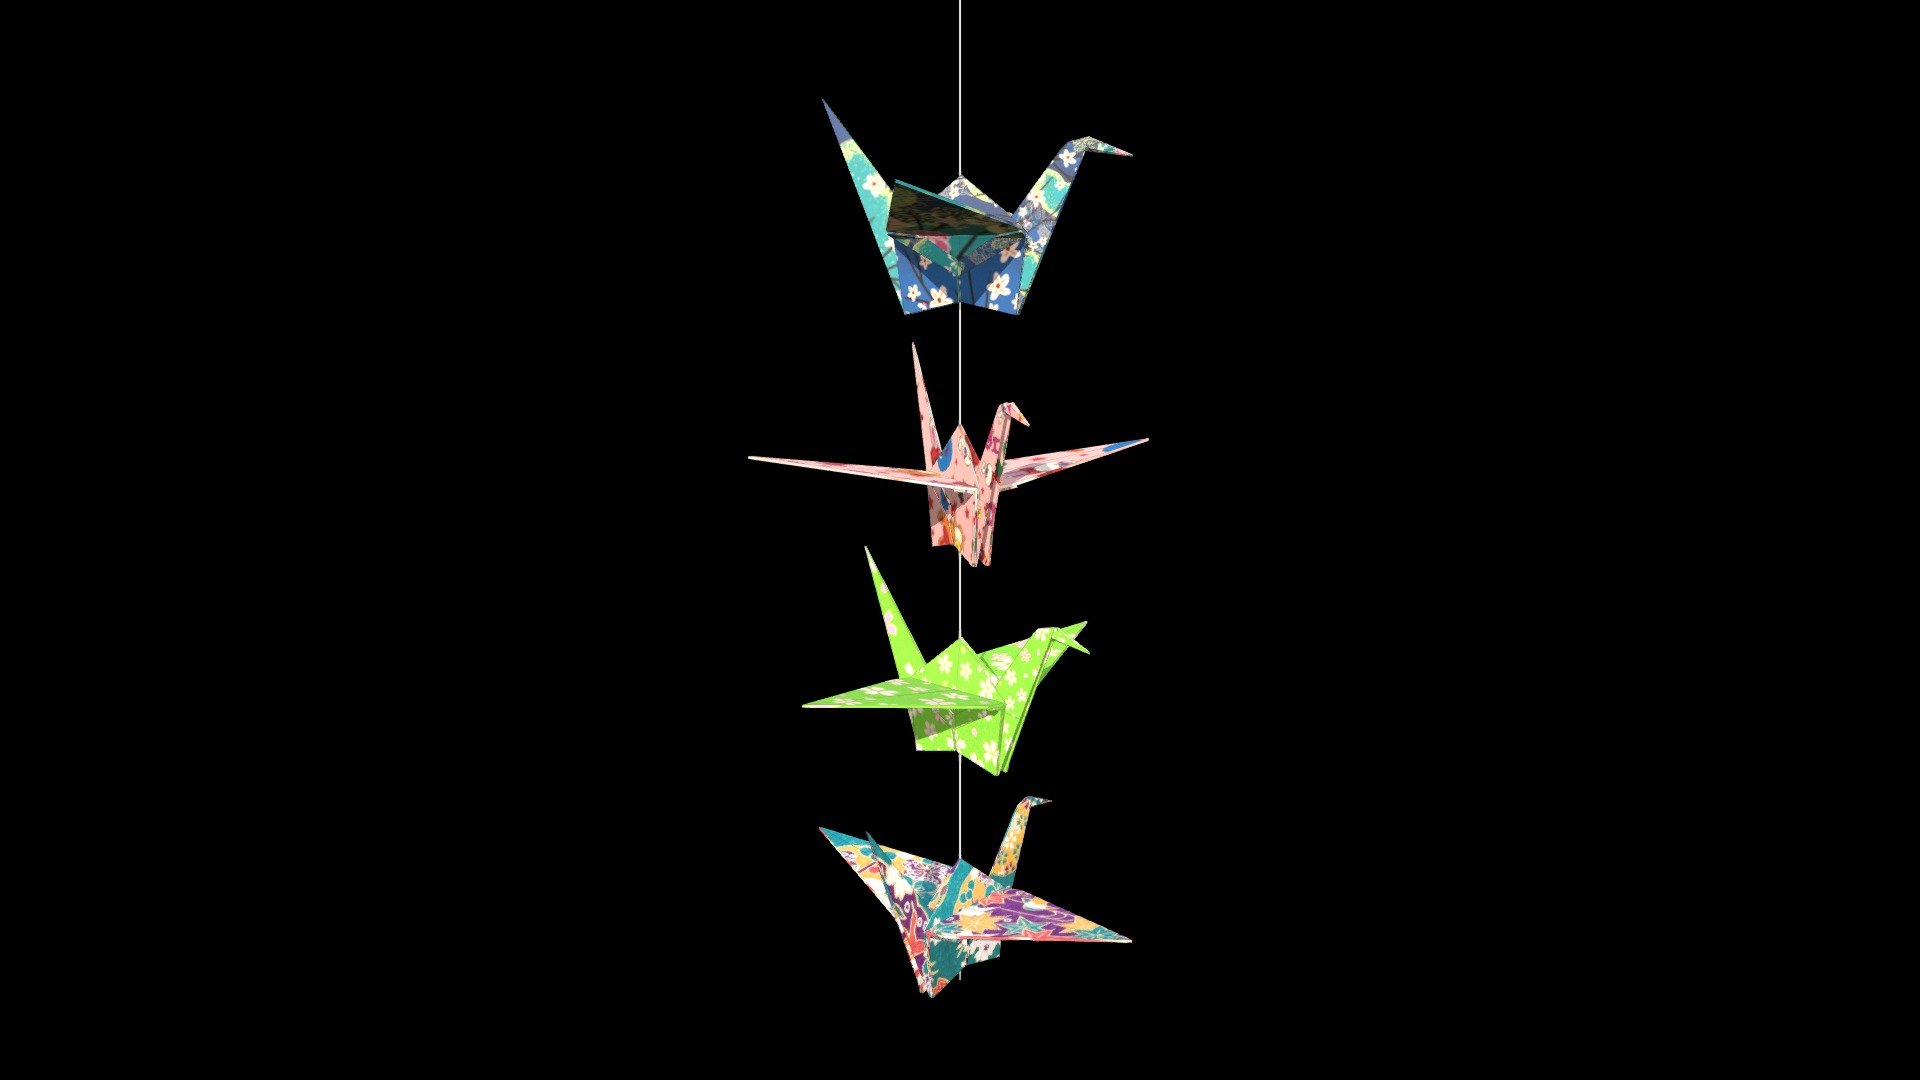 Origami Paper Crane on String by Ryley Burnett - Origami Paper Crane on String - Download Free 3D model by Ryley Burnett (@ryleyburnett) 3d model